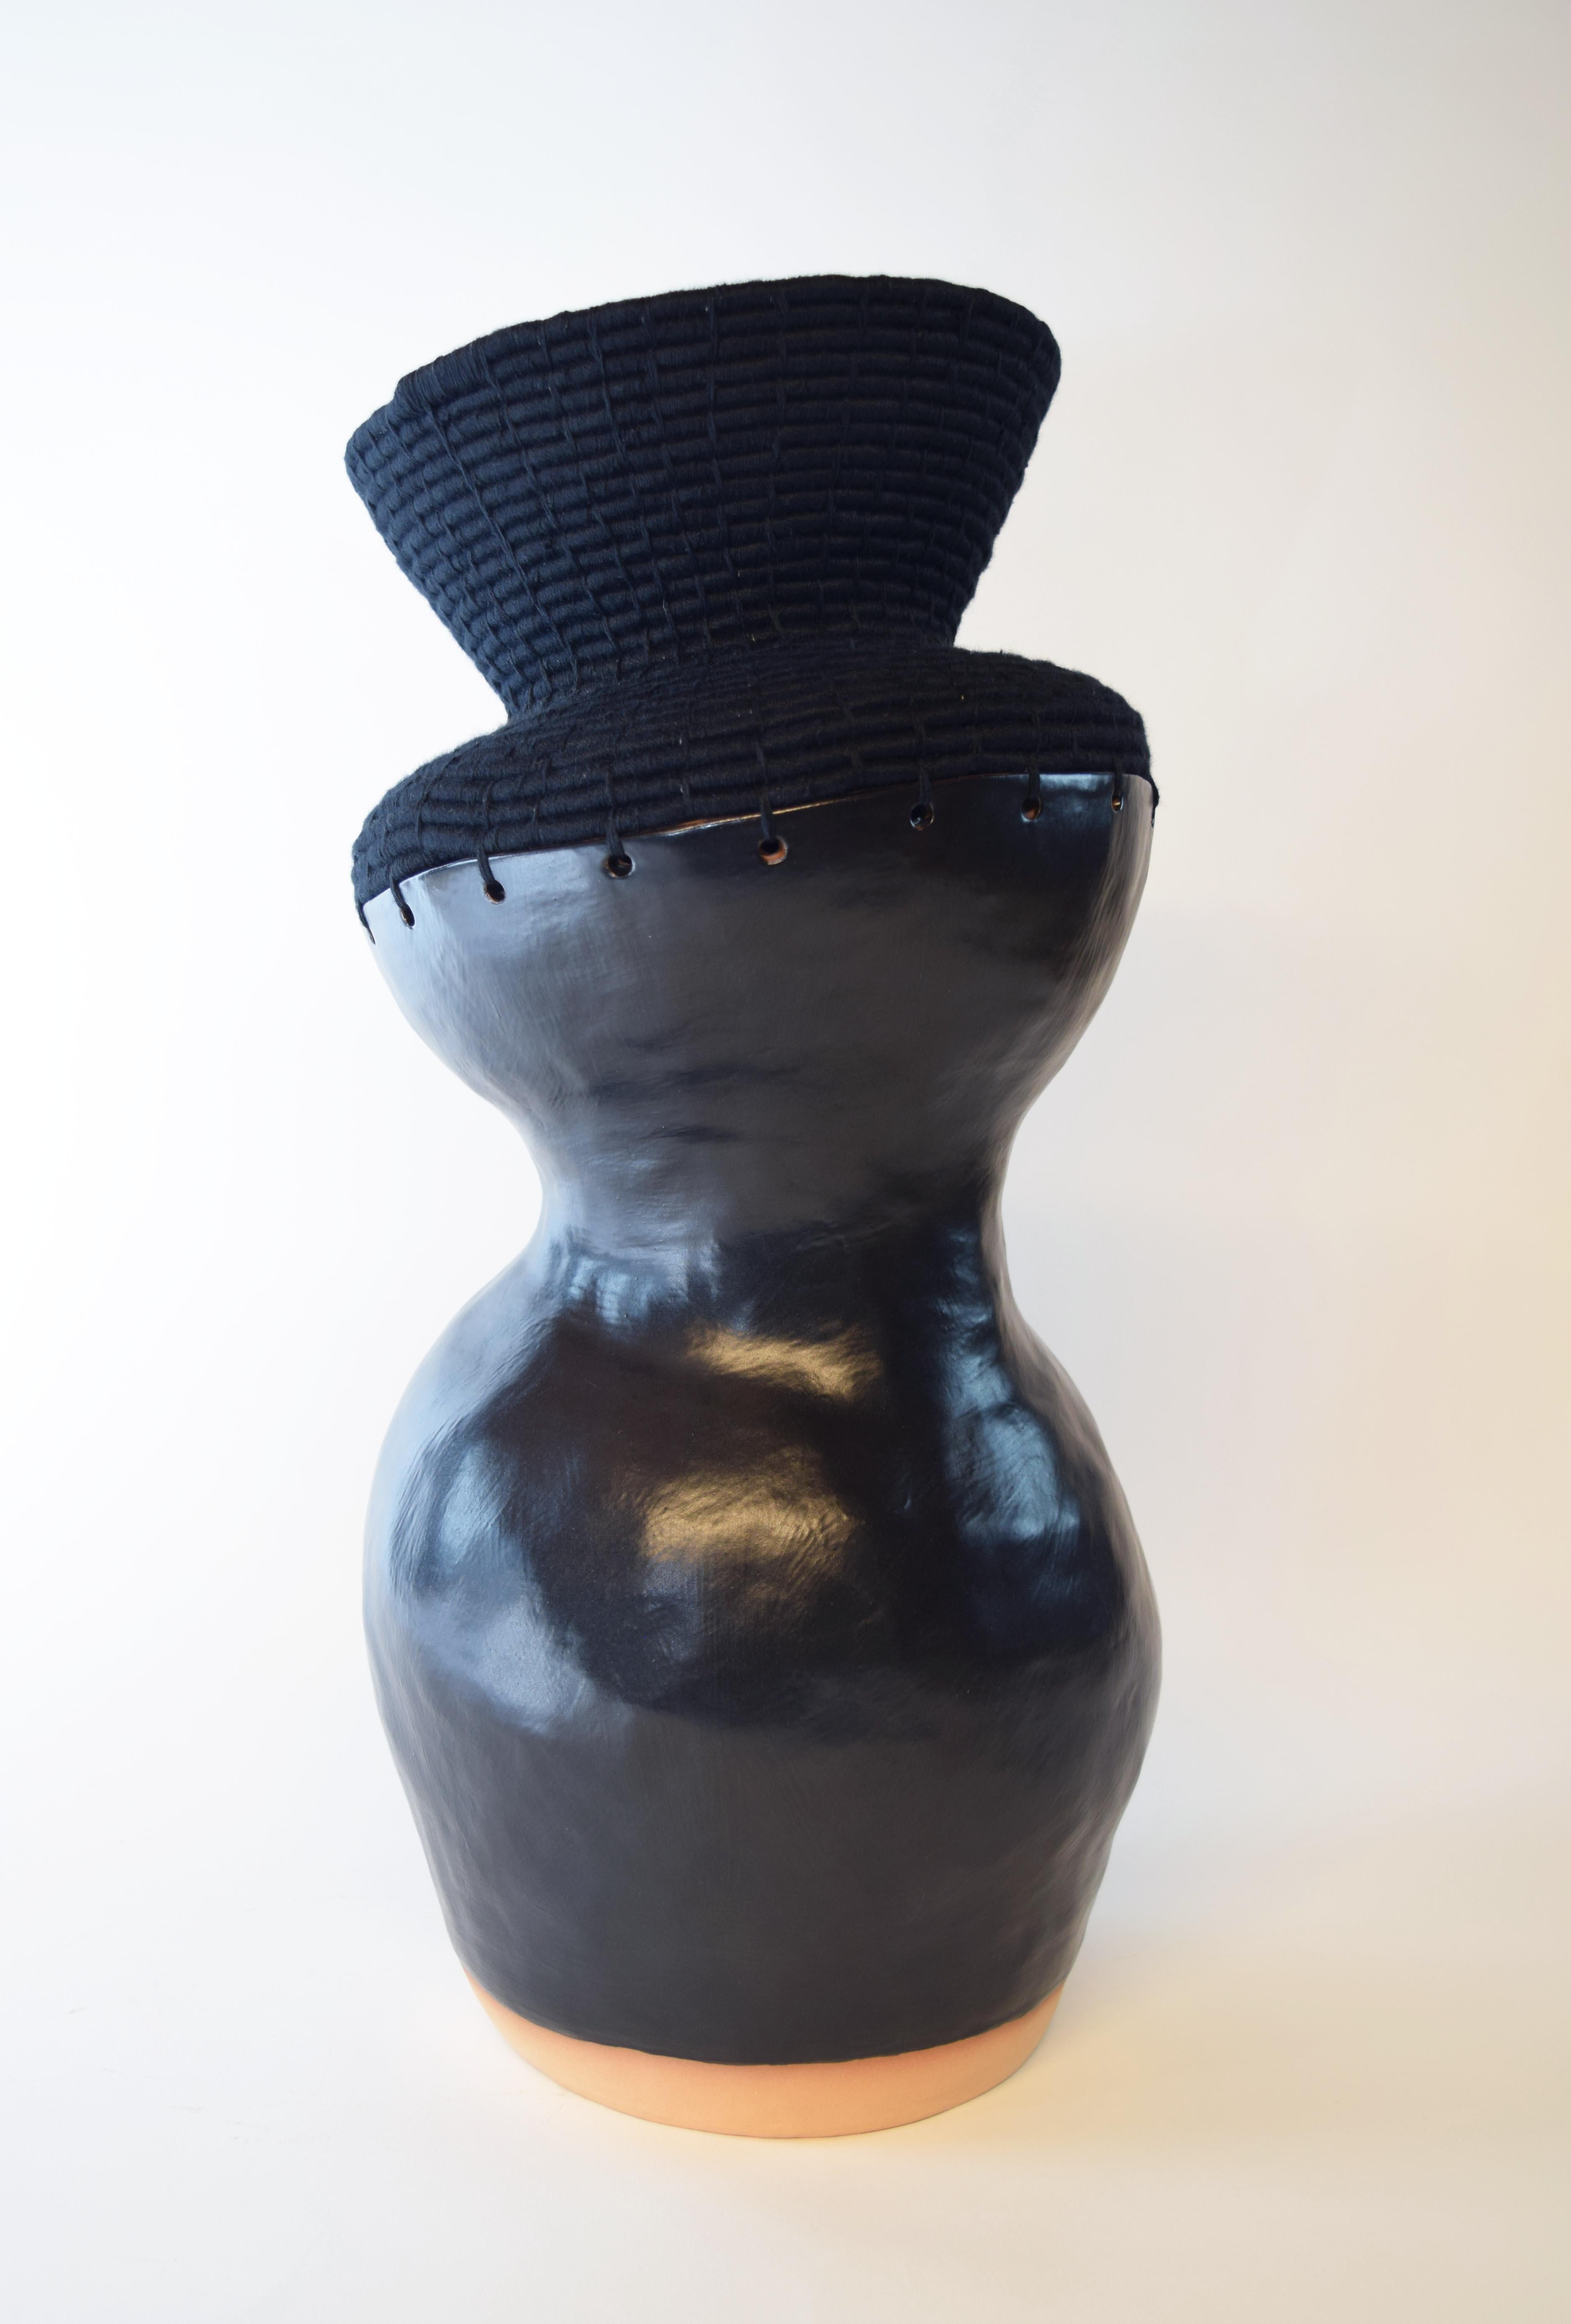 American One of a Kind Ceramic & Woven Fiber Vessel #761, Satin Black Glaze, Black Cotton For Sale